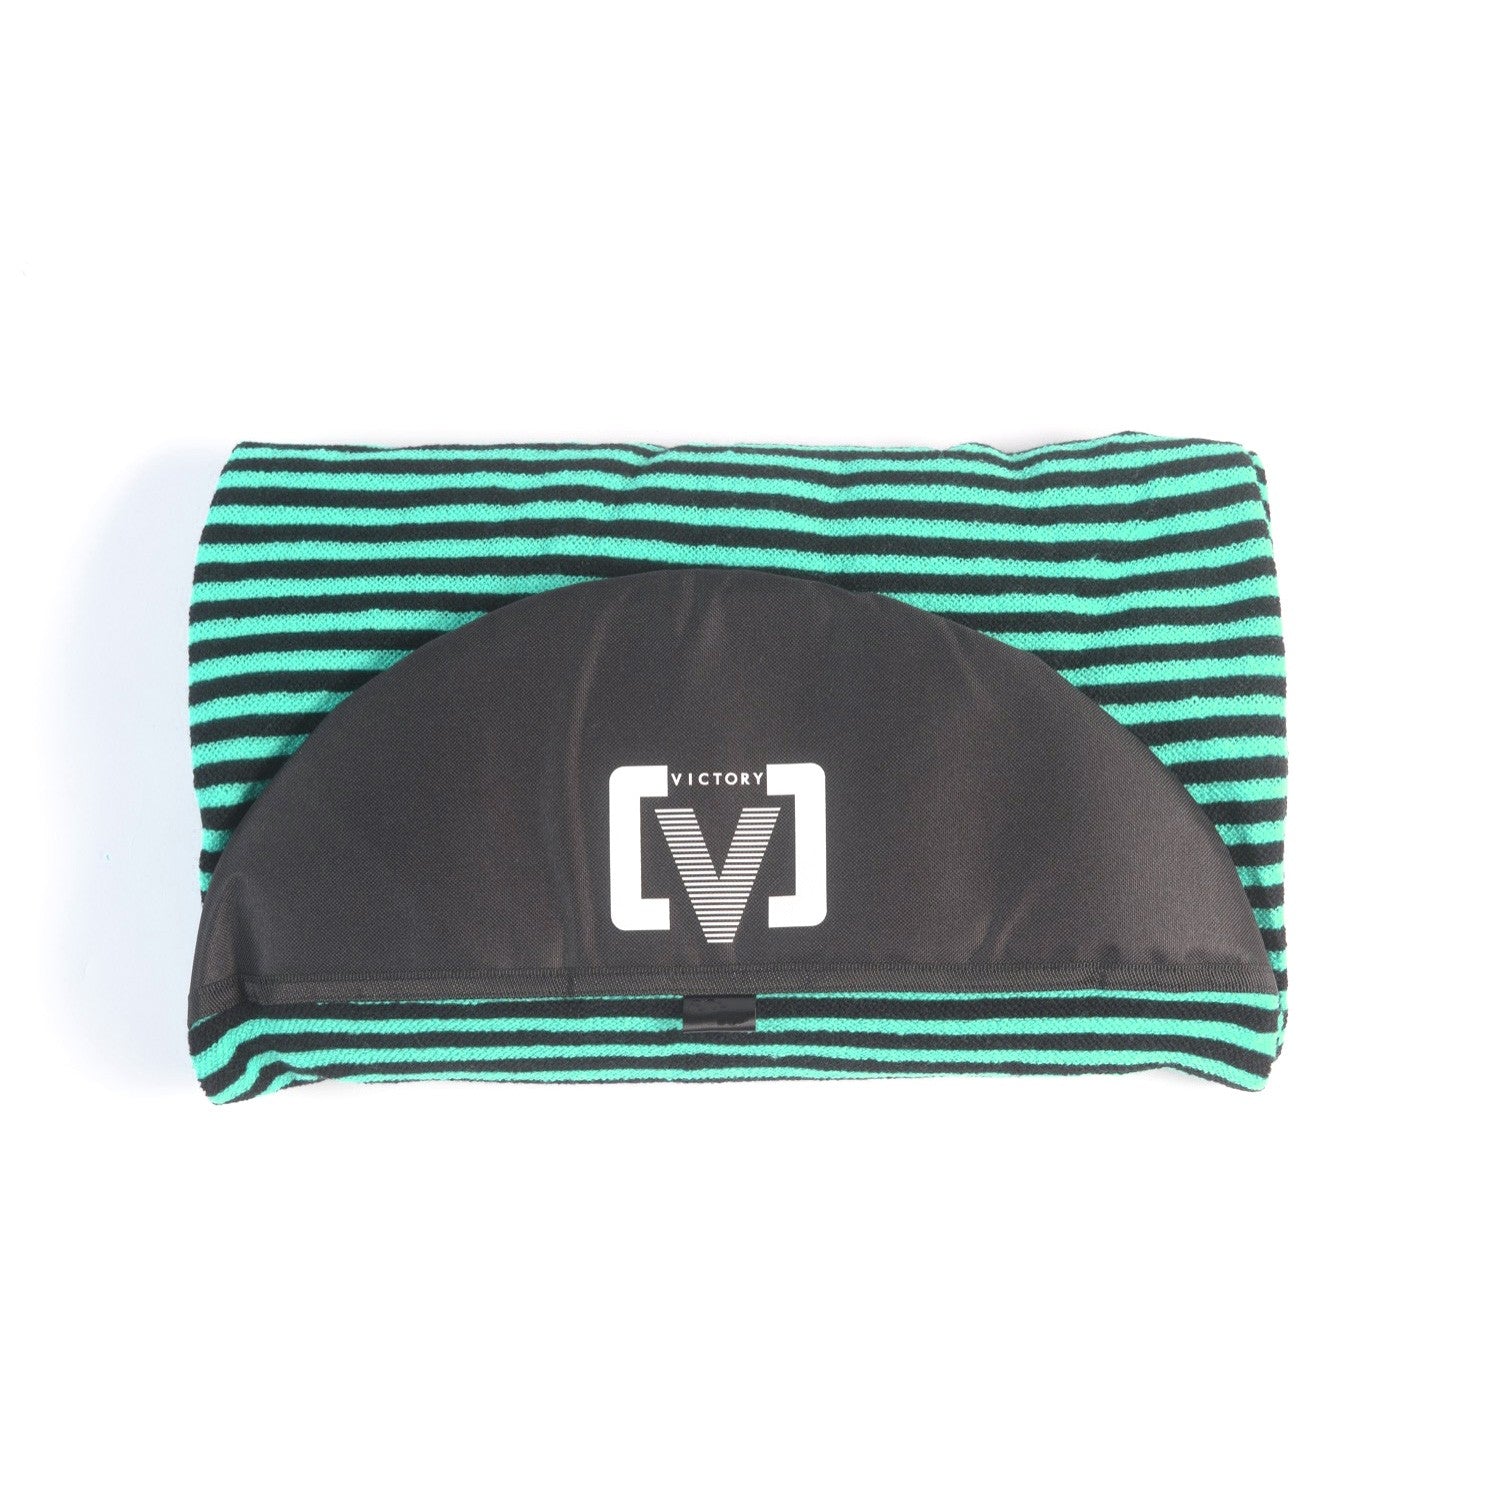 VICTORY - Longboard sock cover - 9'6 - Black / Green